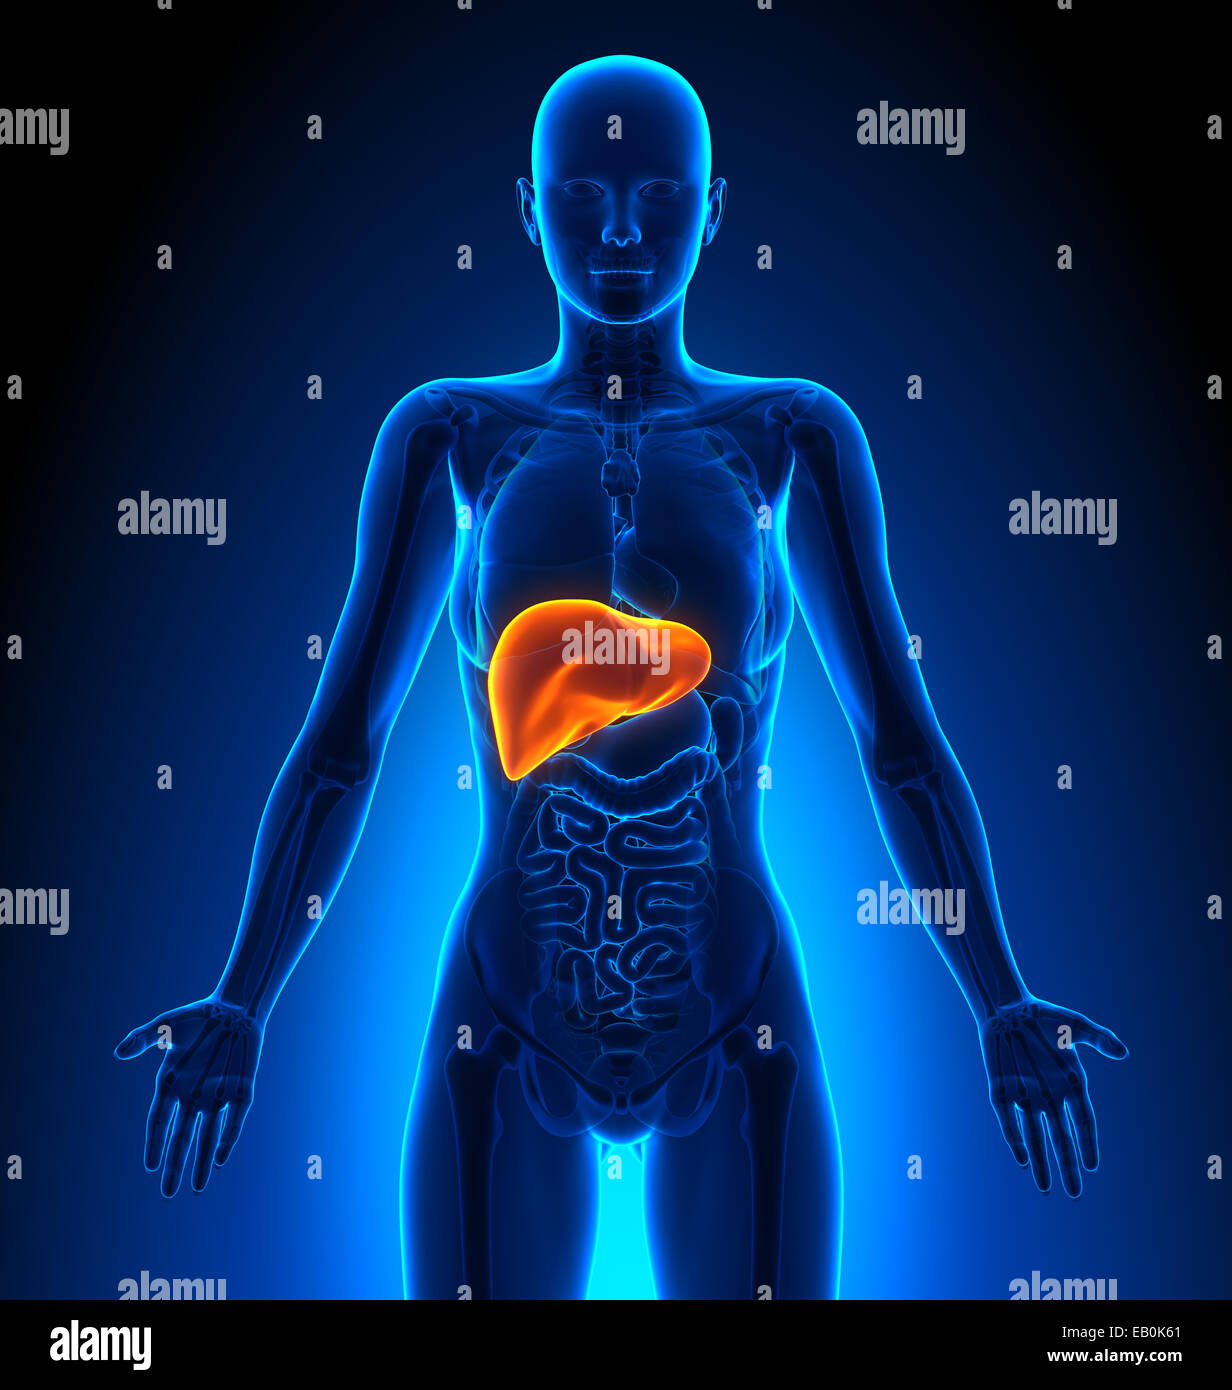 Liver - Female Organs - Human Anatomy Stock Photo